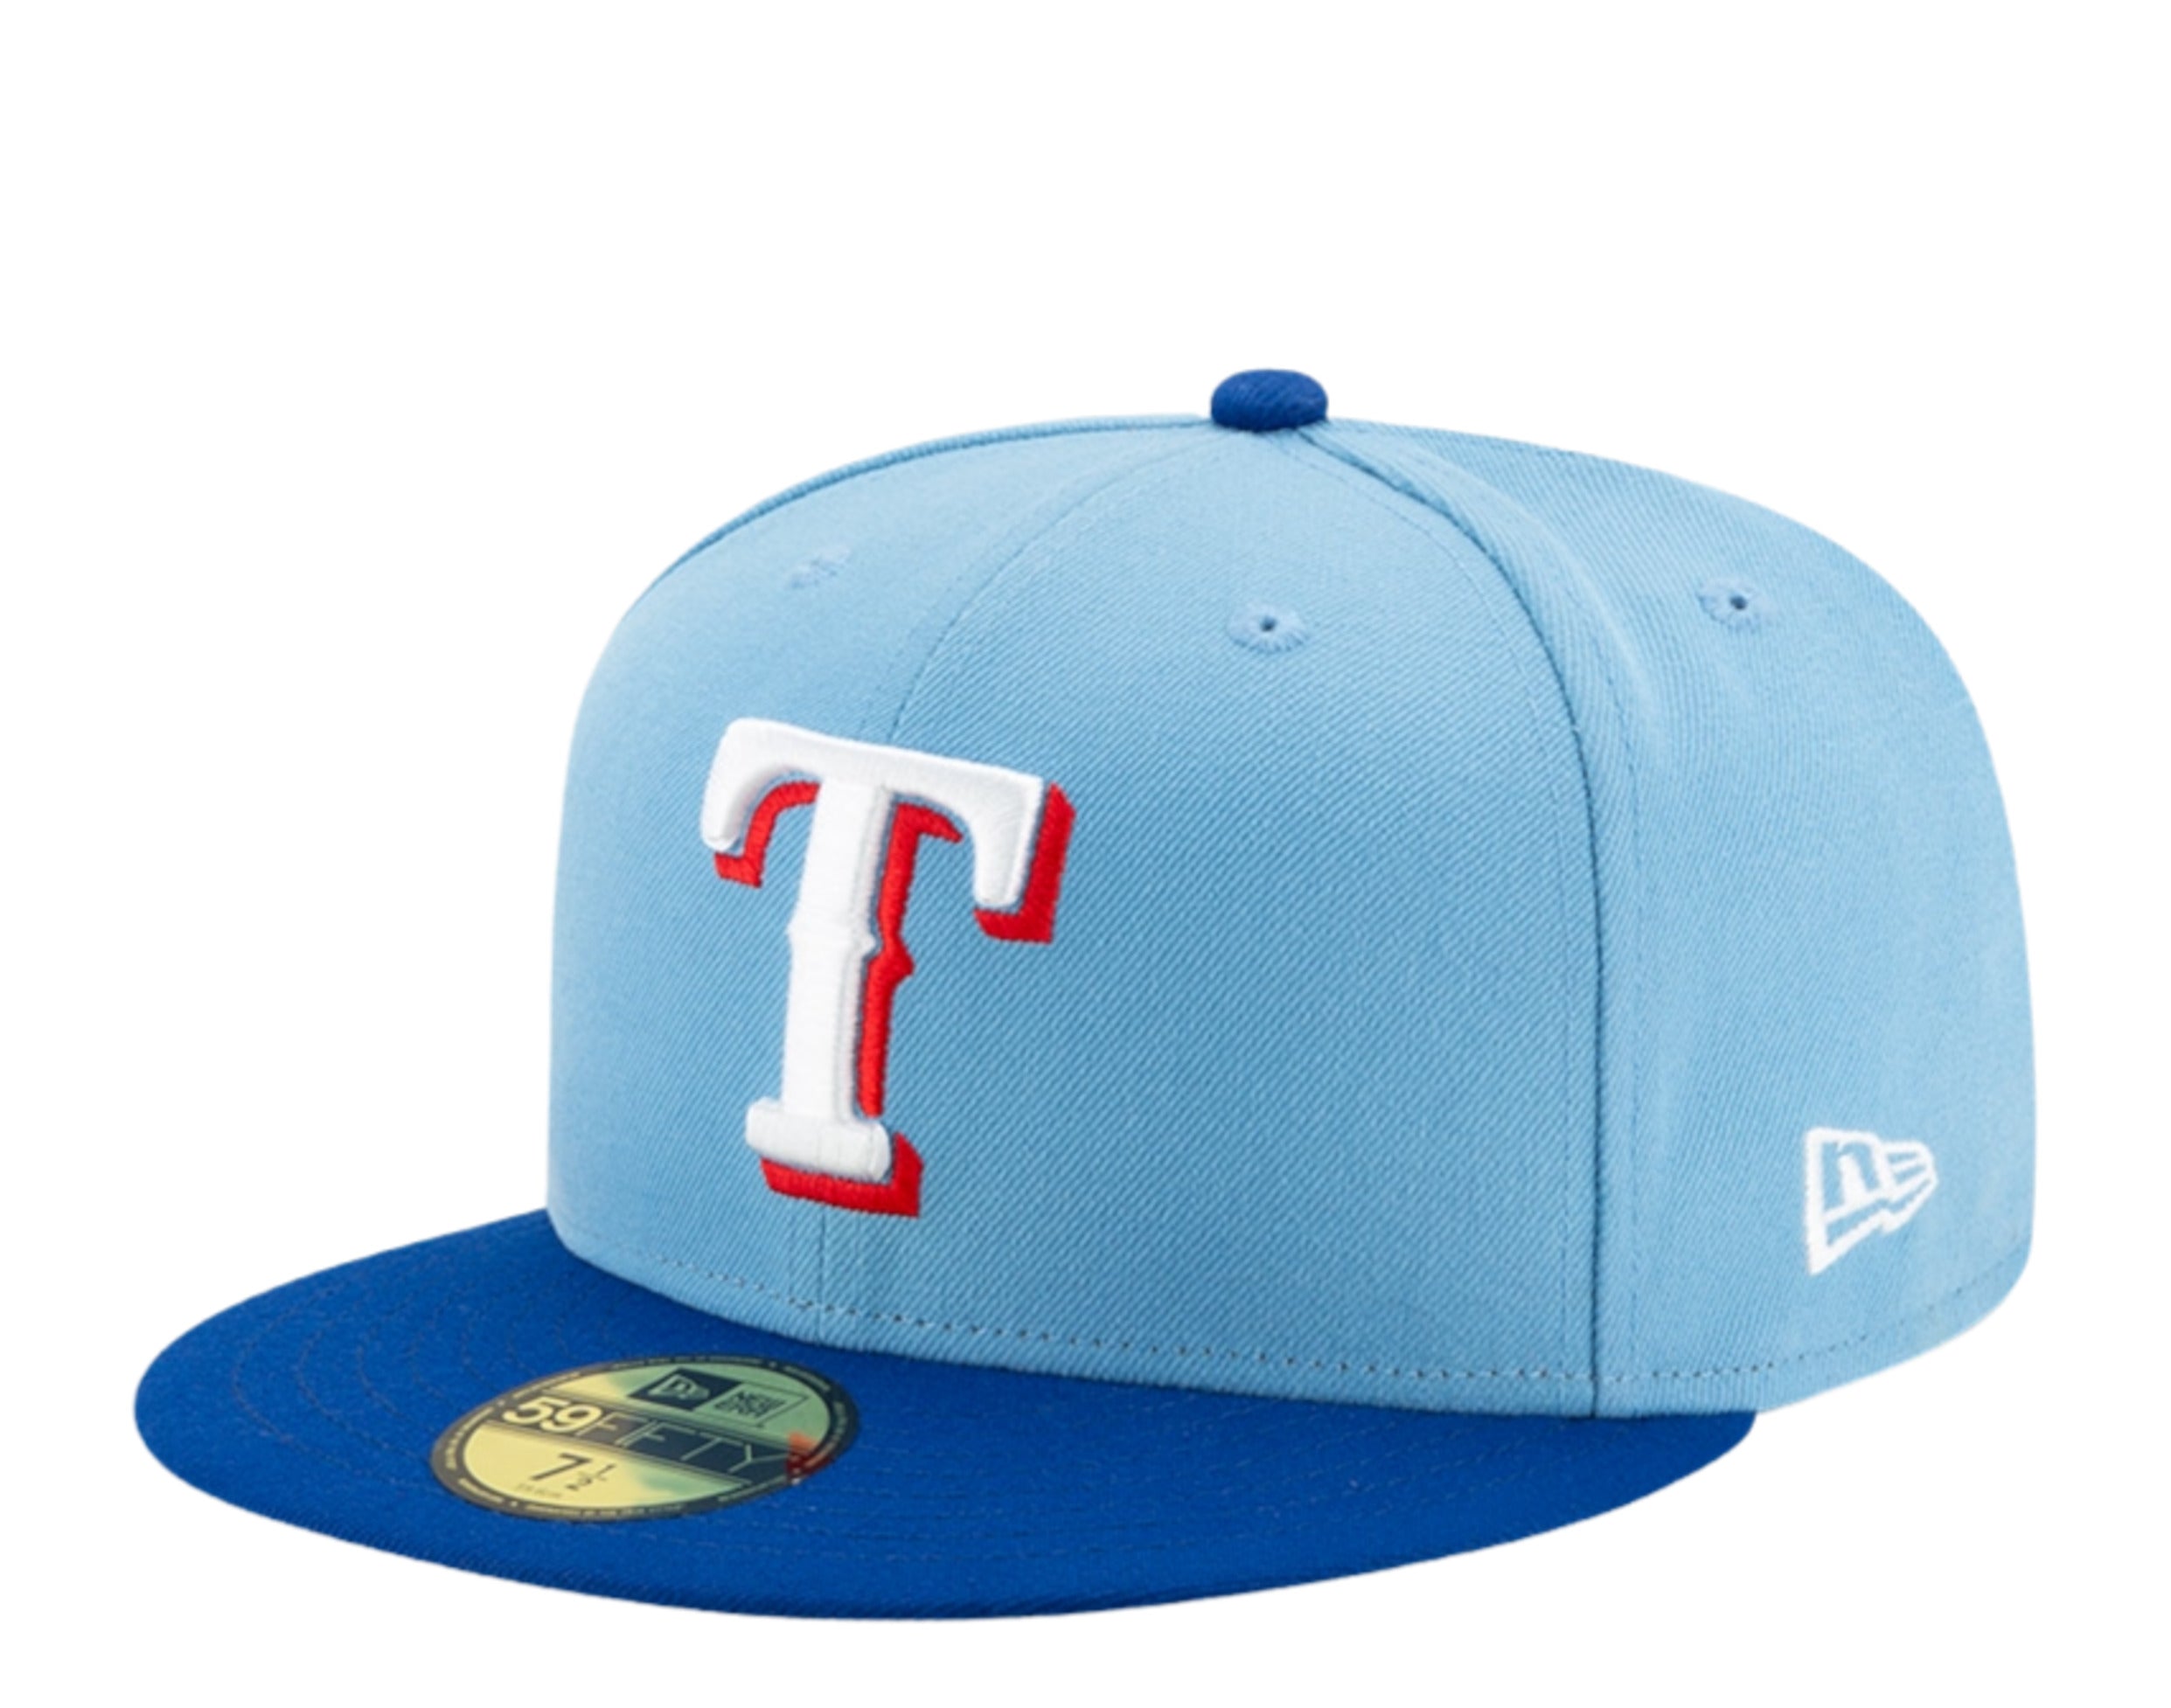 Texas Rangers Nike Alternate 50th Anniversary Authentic Team Jersey - Light  Blue